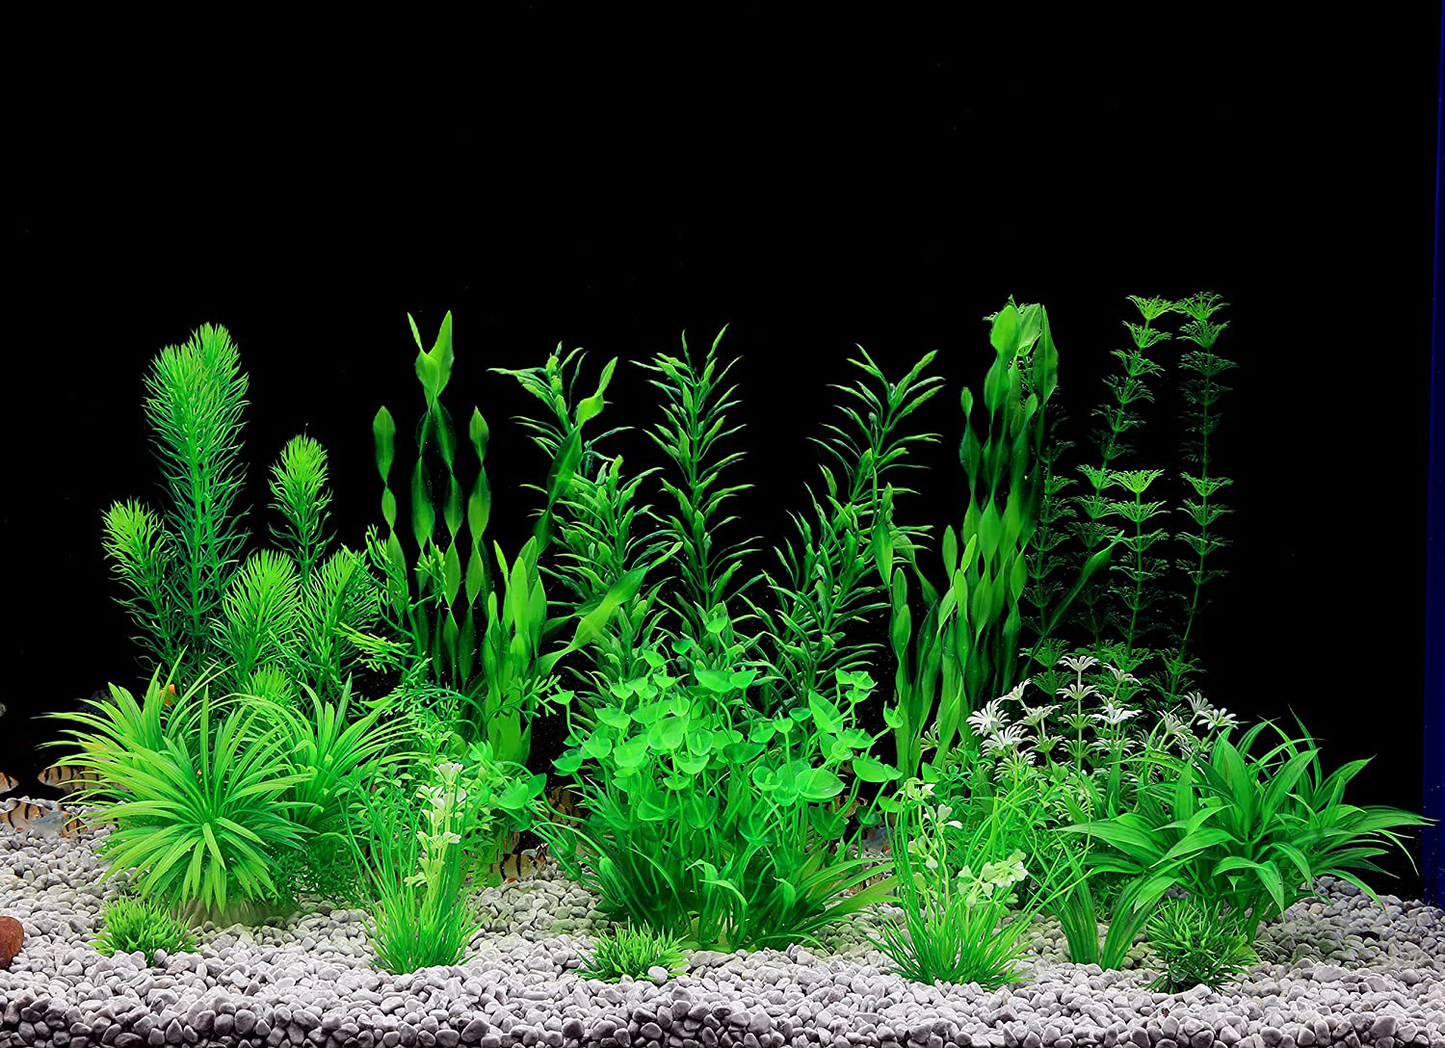 Mylifeunit Aquarium Plants, 20 Pack Artificial Fish Tank Plants for Aquarium Decorations (Green) Animals & Pet Supplies > Pet Supplies > Fish Supplies > Aquarium Decor MyLifeUNIT   